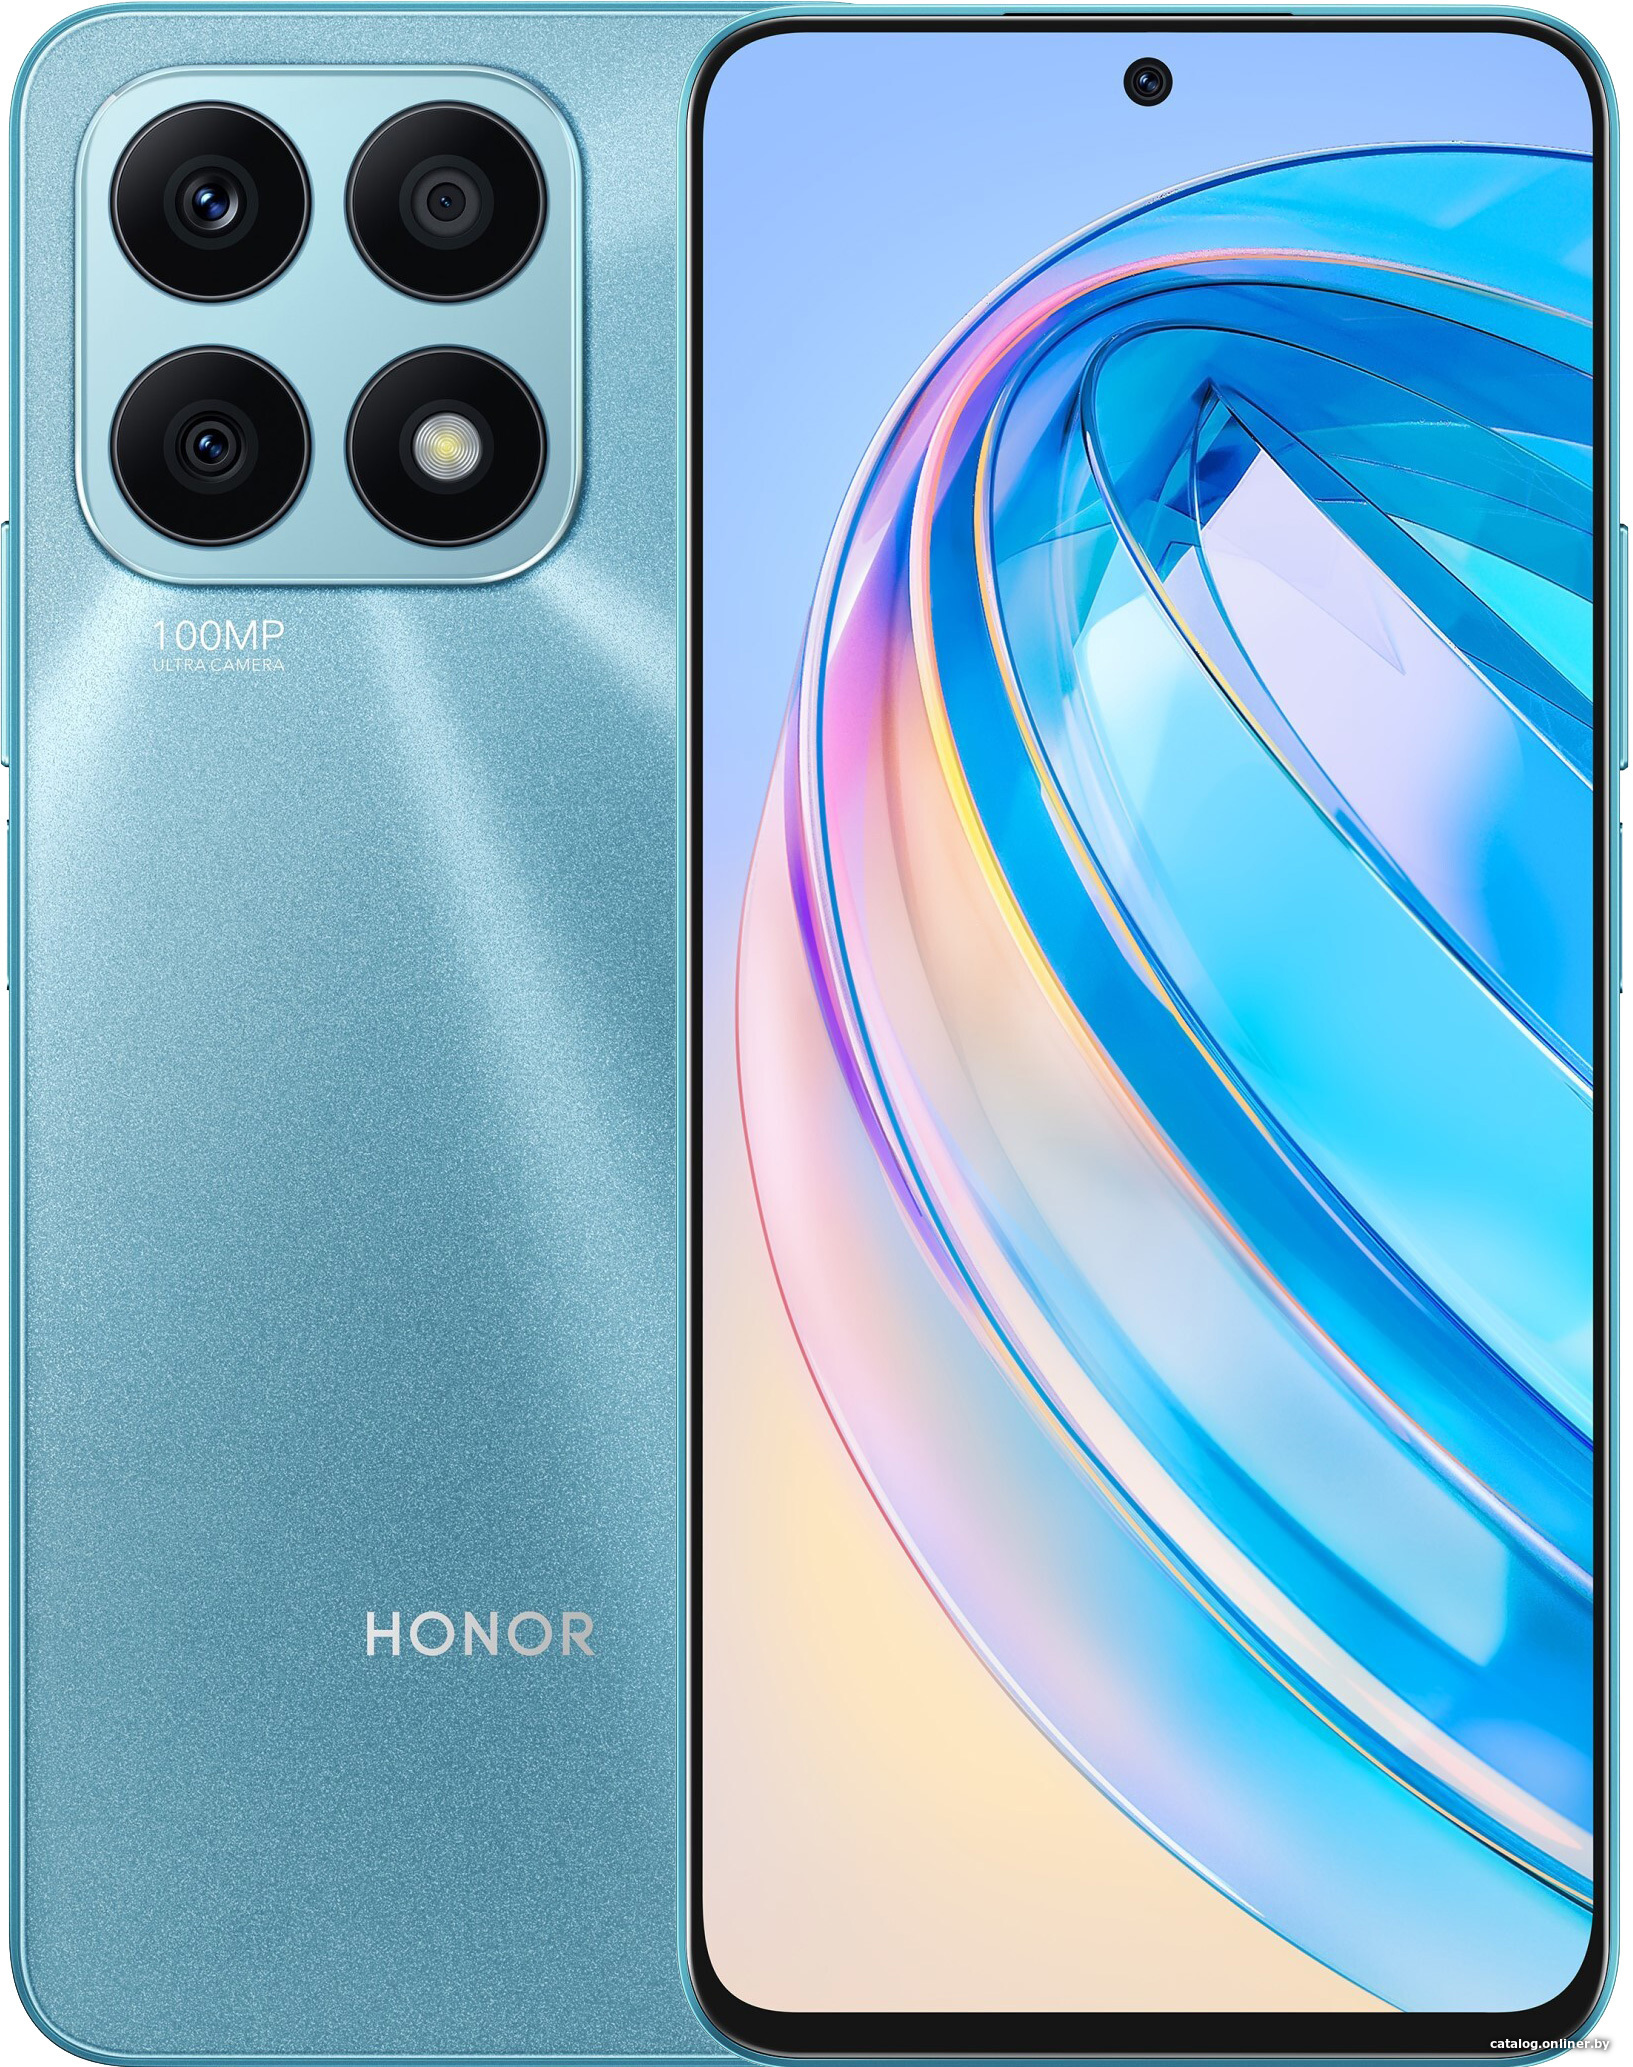 HONOR X8a 6GB/128GB международная версия (небесно-голубой) смартфон купить  в Минске